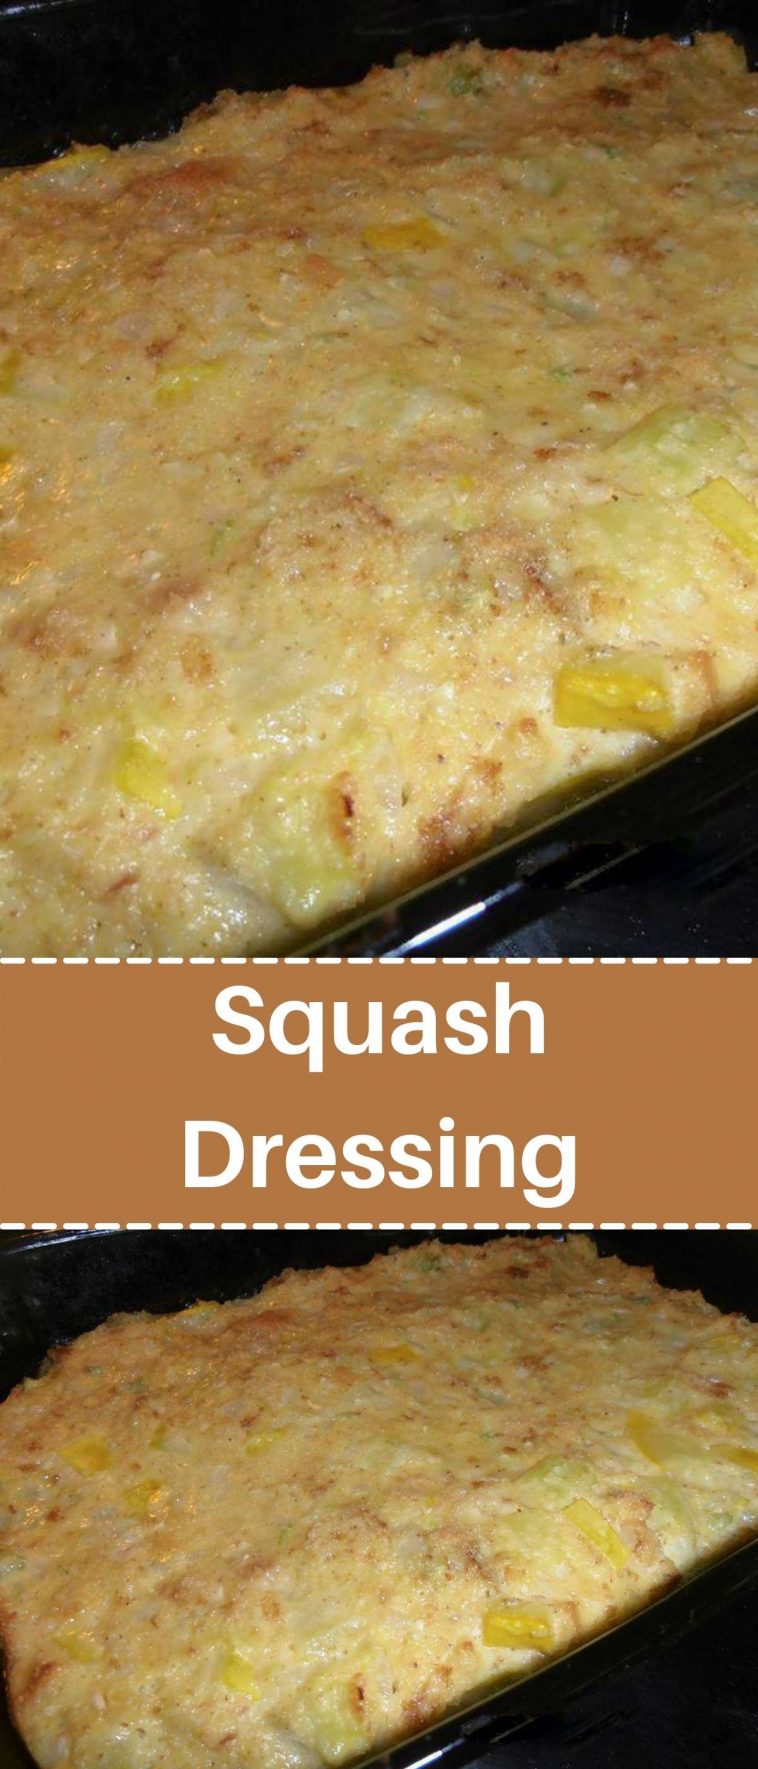 Squash Dressing